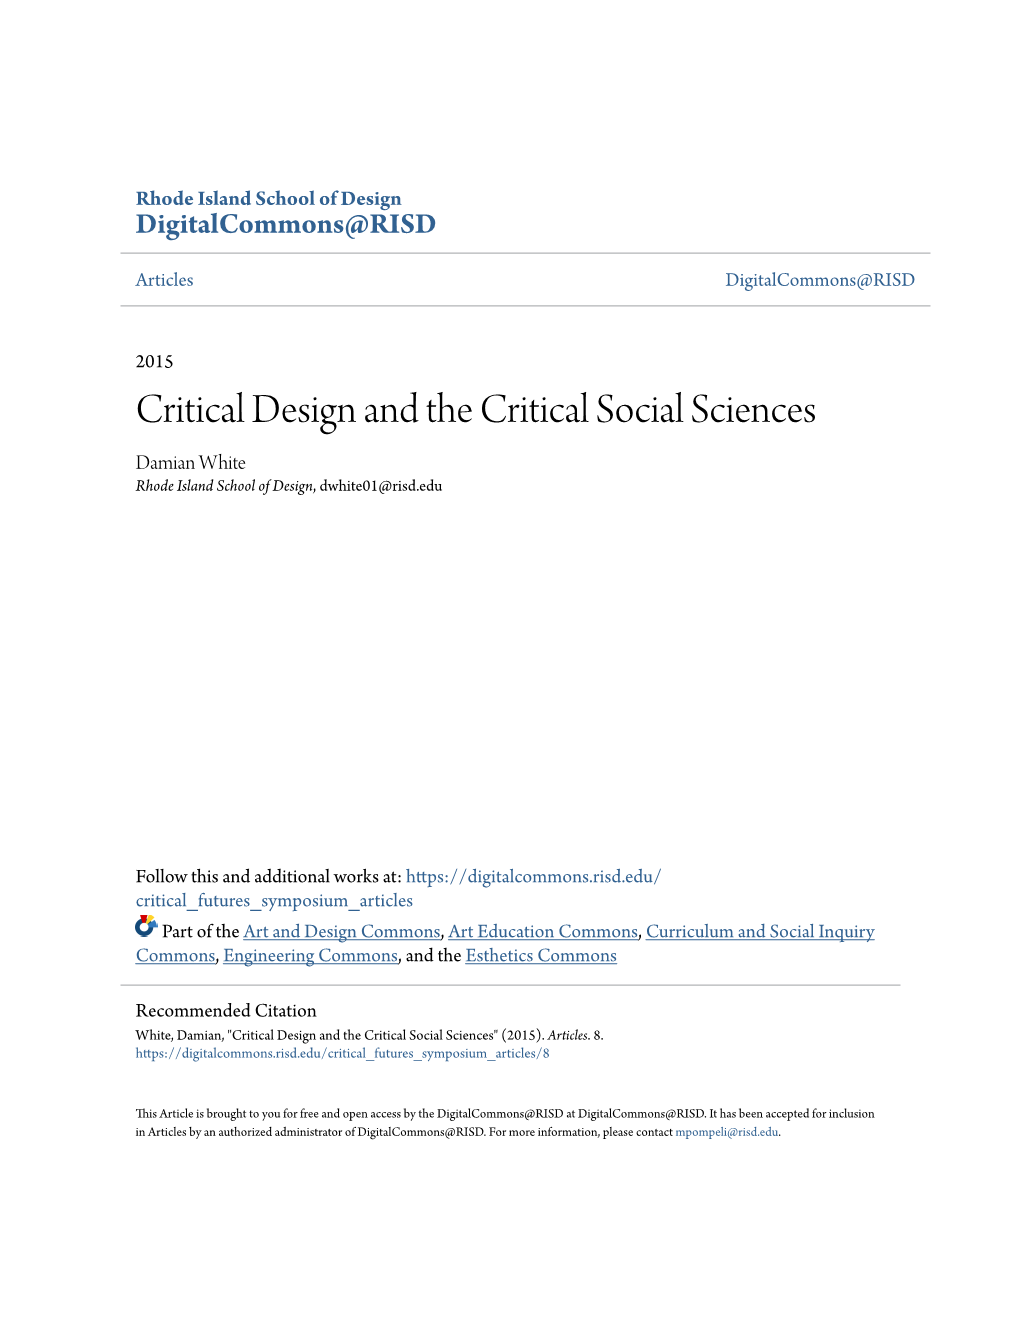 Critical Design and the Critical Social Sciences Damian White Rhode Island School of Design, Dwhite01@Risd.Edu